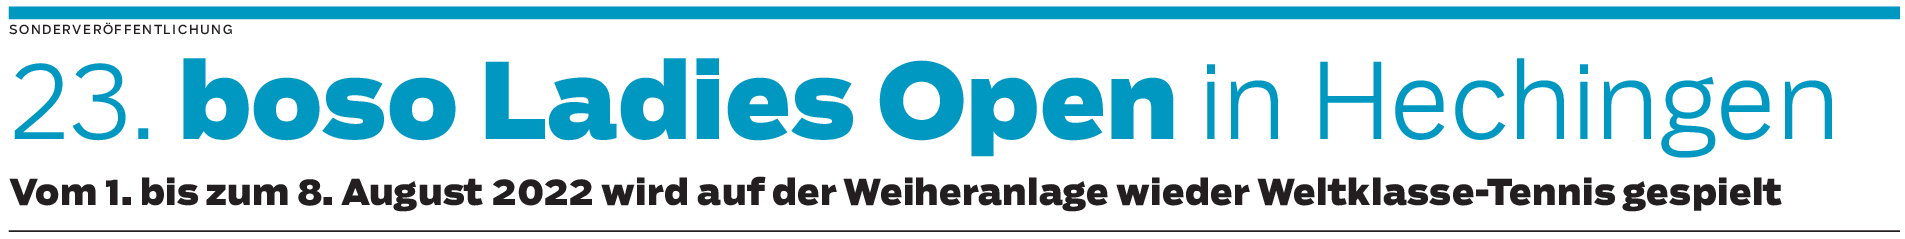 boso Ladies Open 2022 in Hechingen: Australierin Jaimee Fourlis führt die Setzliste an